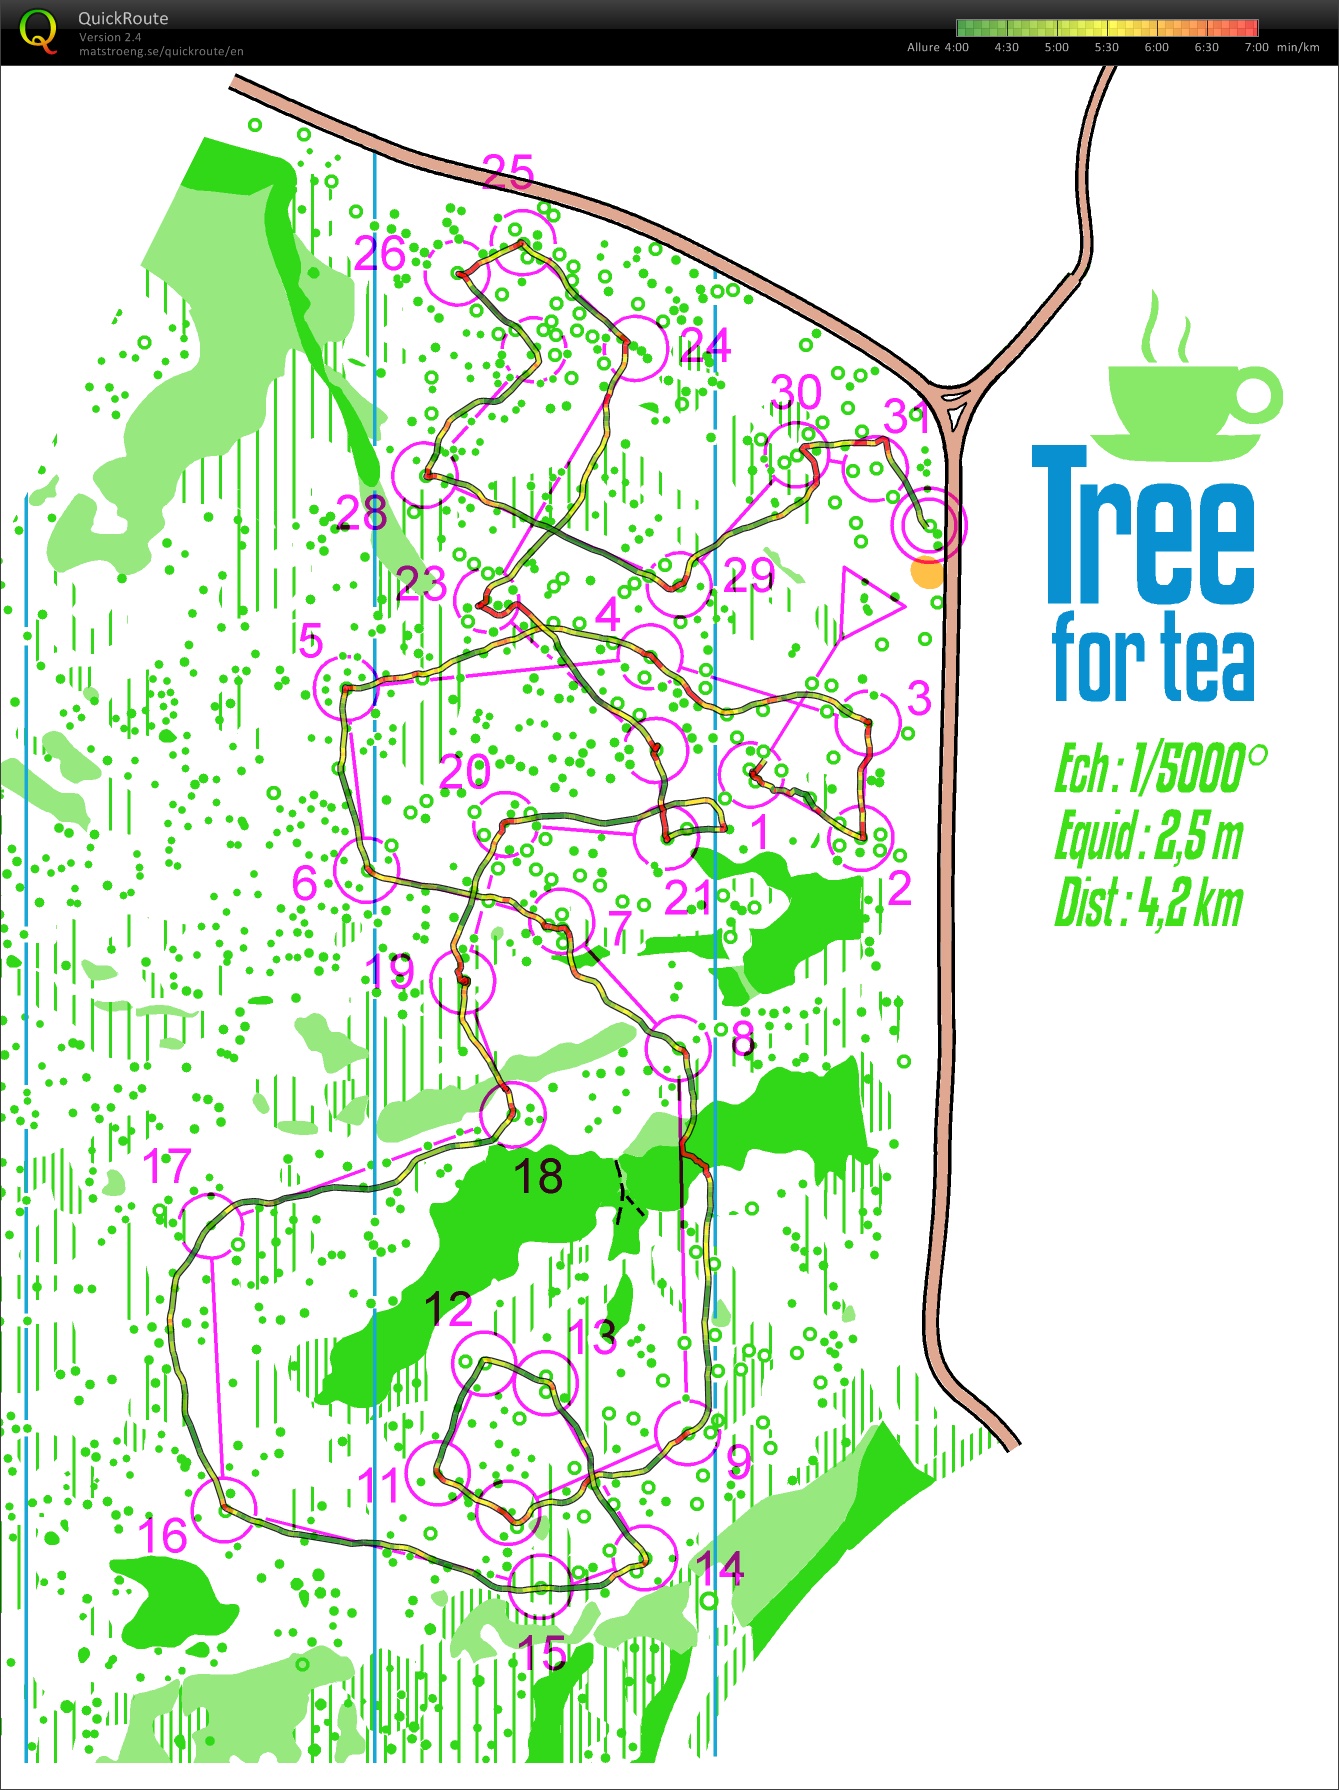 Tree for tea (16-01-2016)